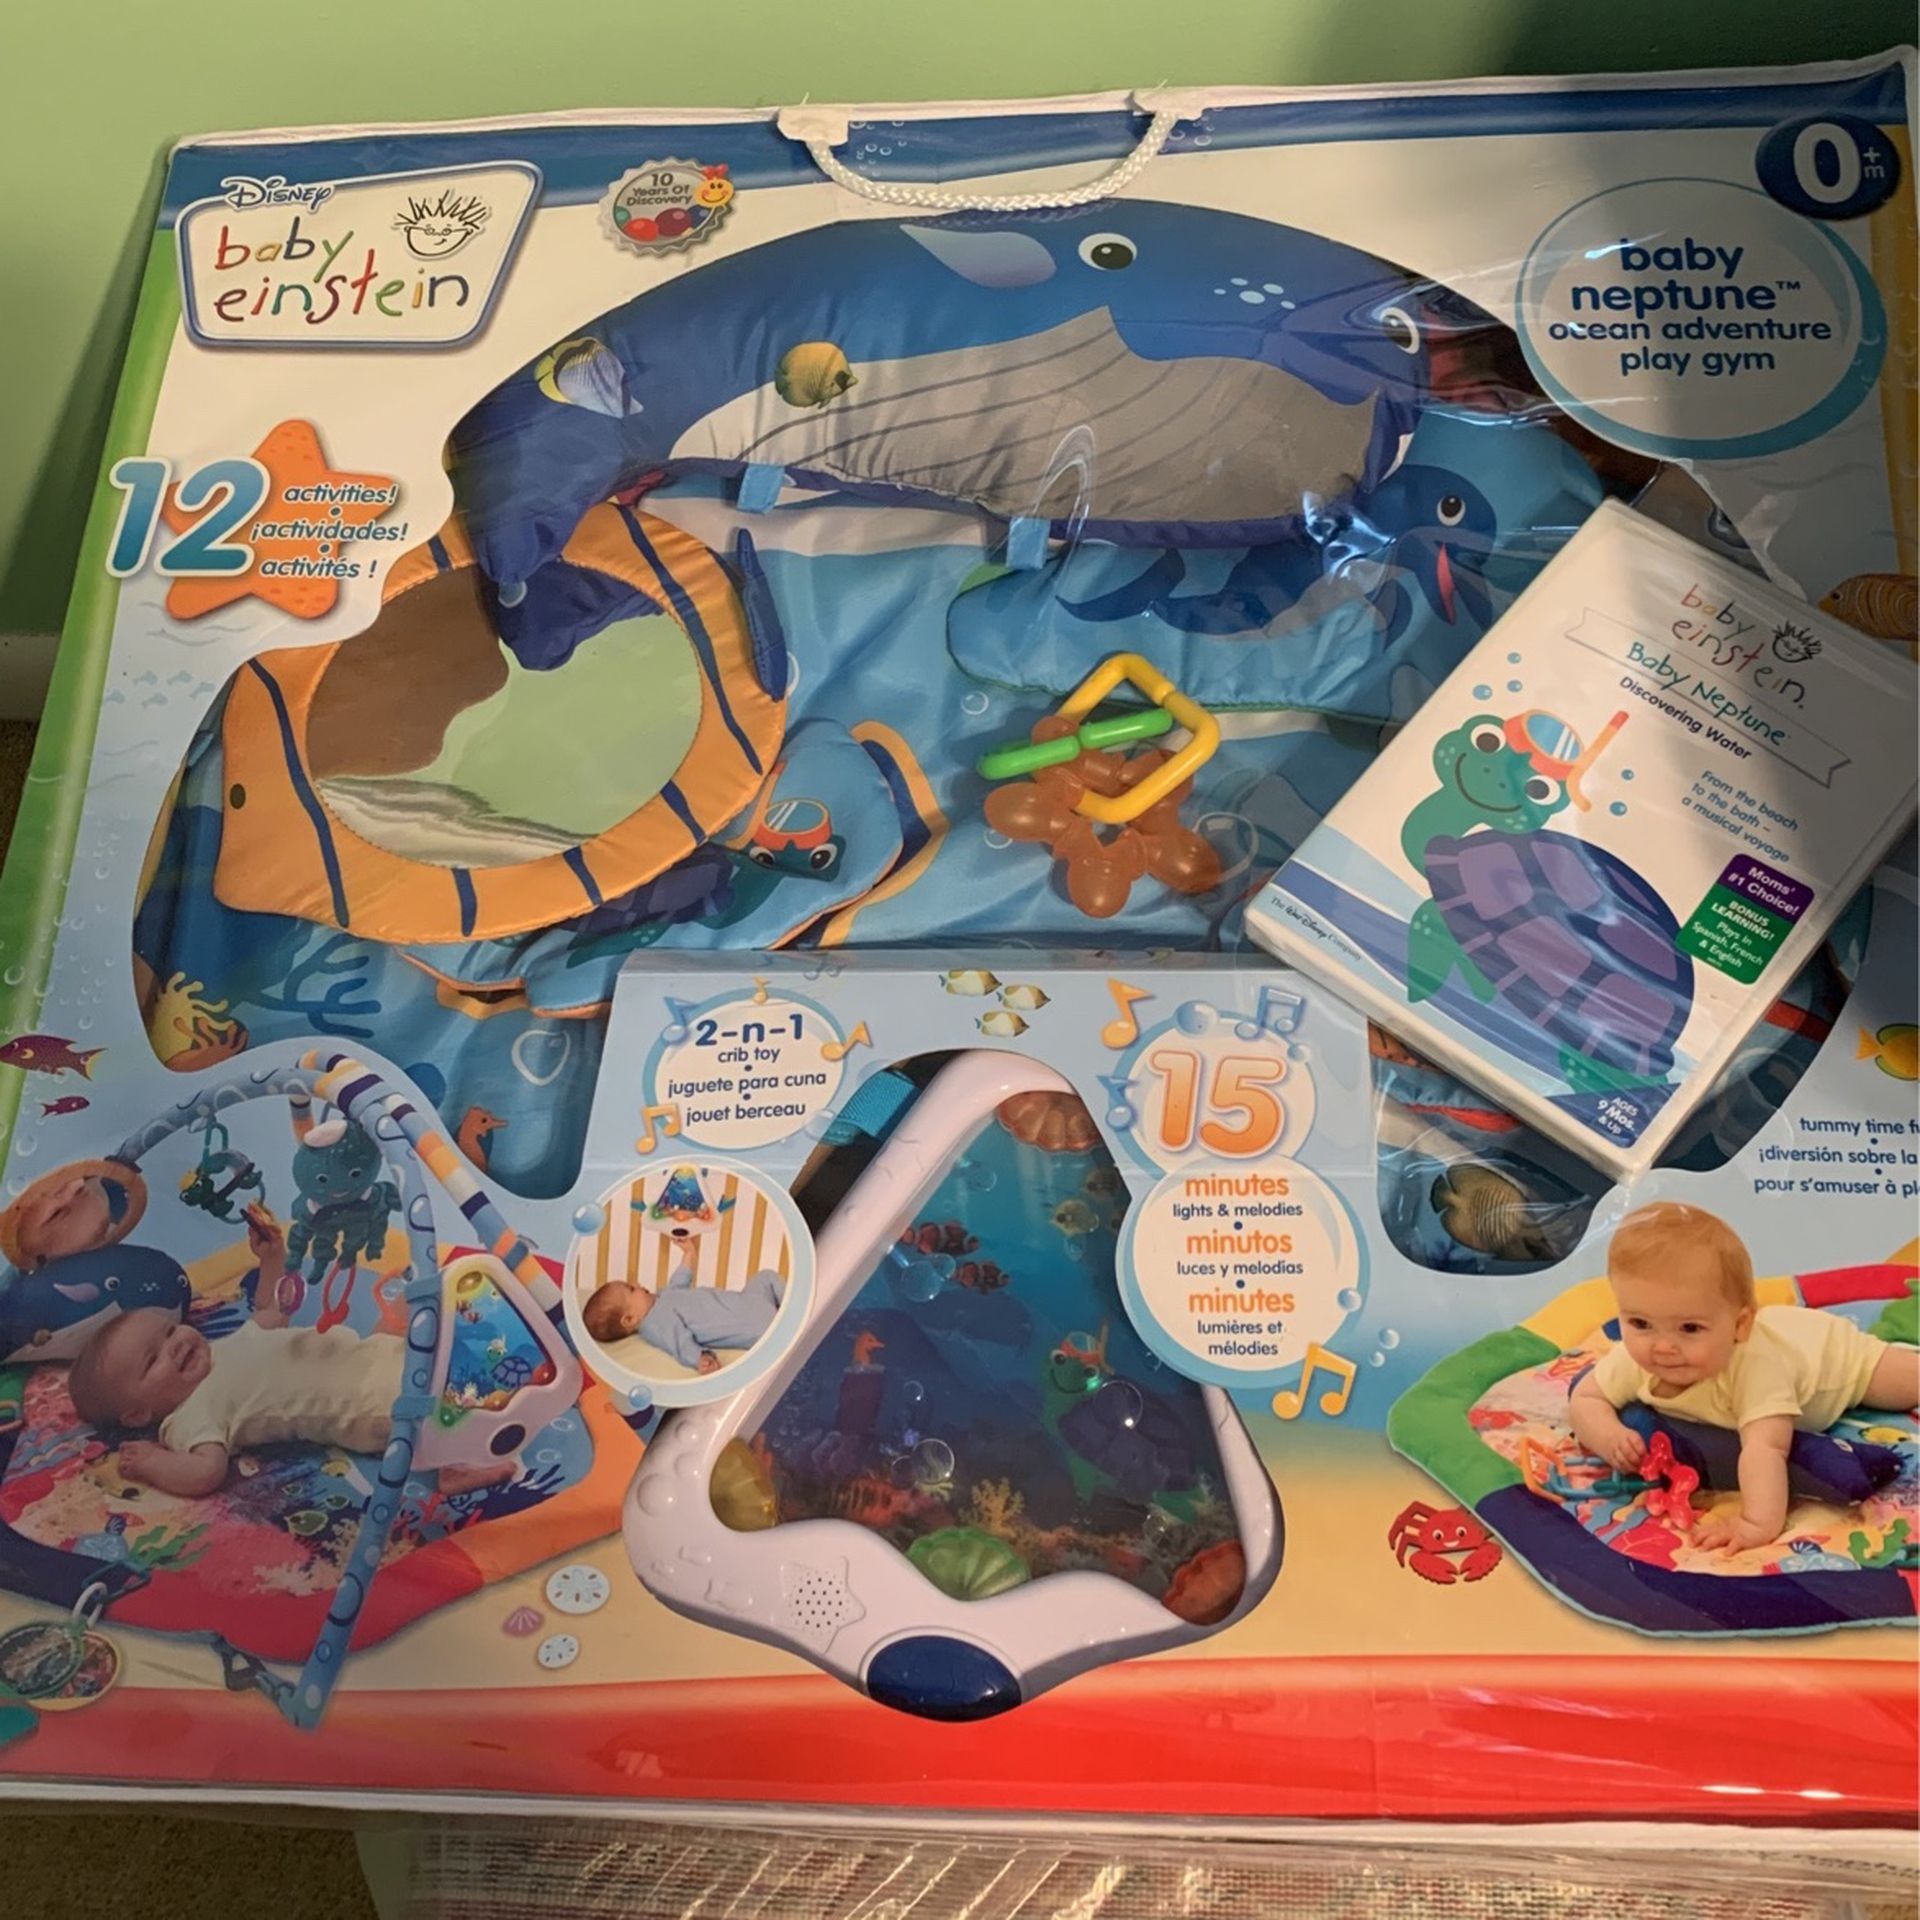 Disney Baby Neptune Ocean Adventure Play Gym + DVD